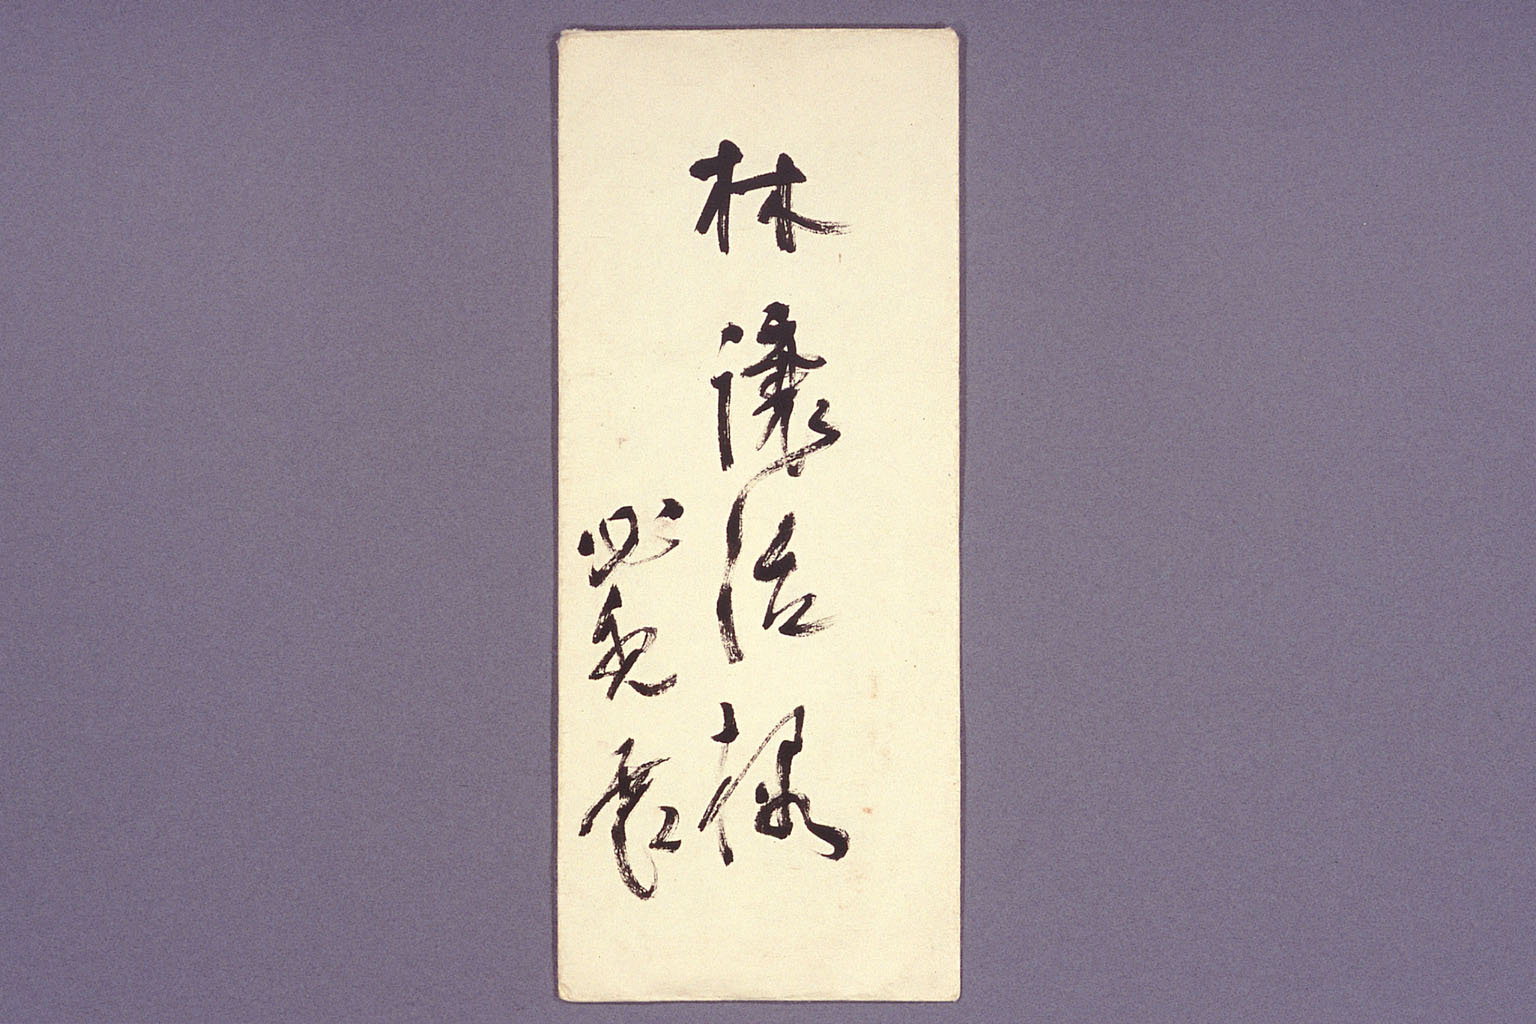 Letter from YOSHIDA Shigeru to HAYASHI Joji (larger)